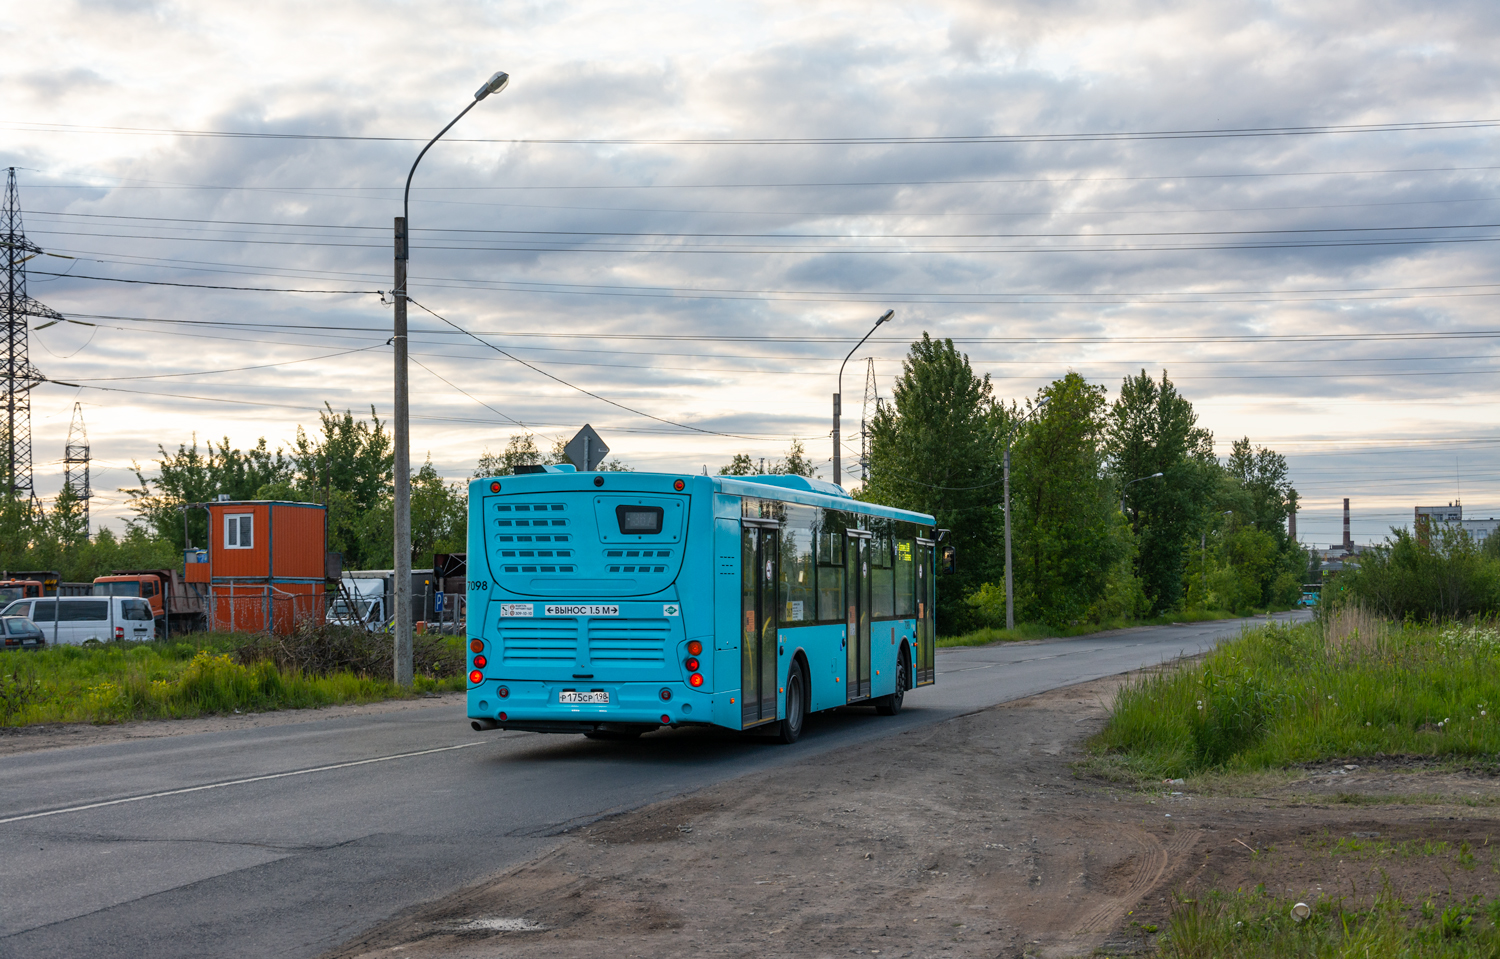 Petersburg, Volgabus-5270.G4 (LNG) # 7098